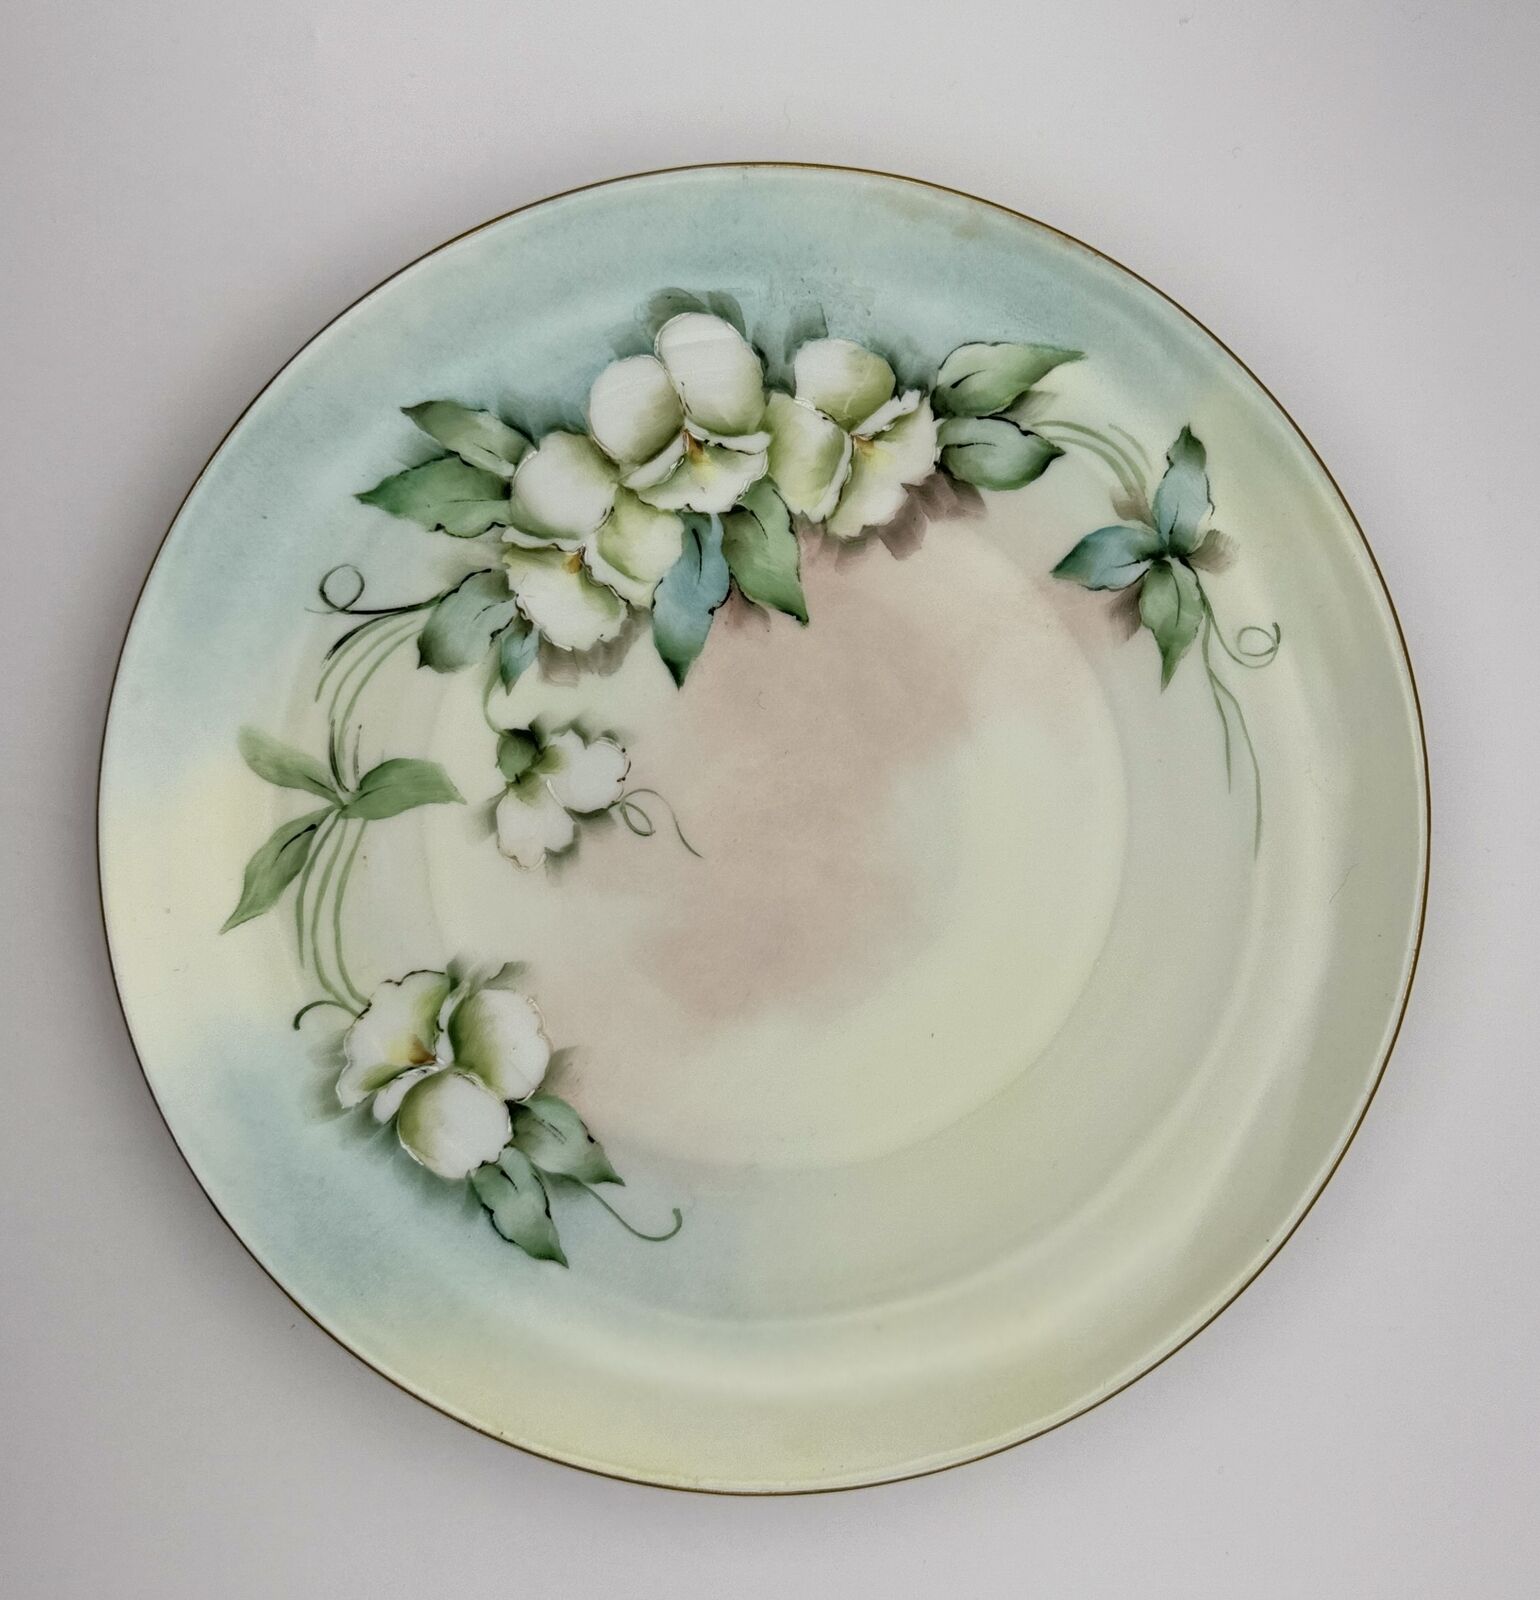 Antique Hand-Painted Porcelain Plate with Floral Design by PSL Empire Austria